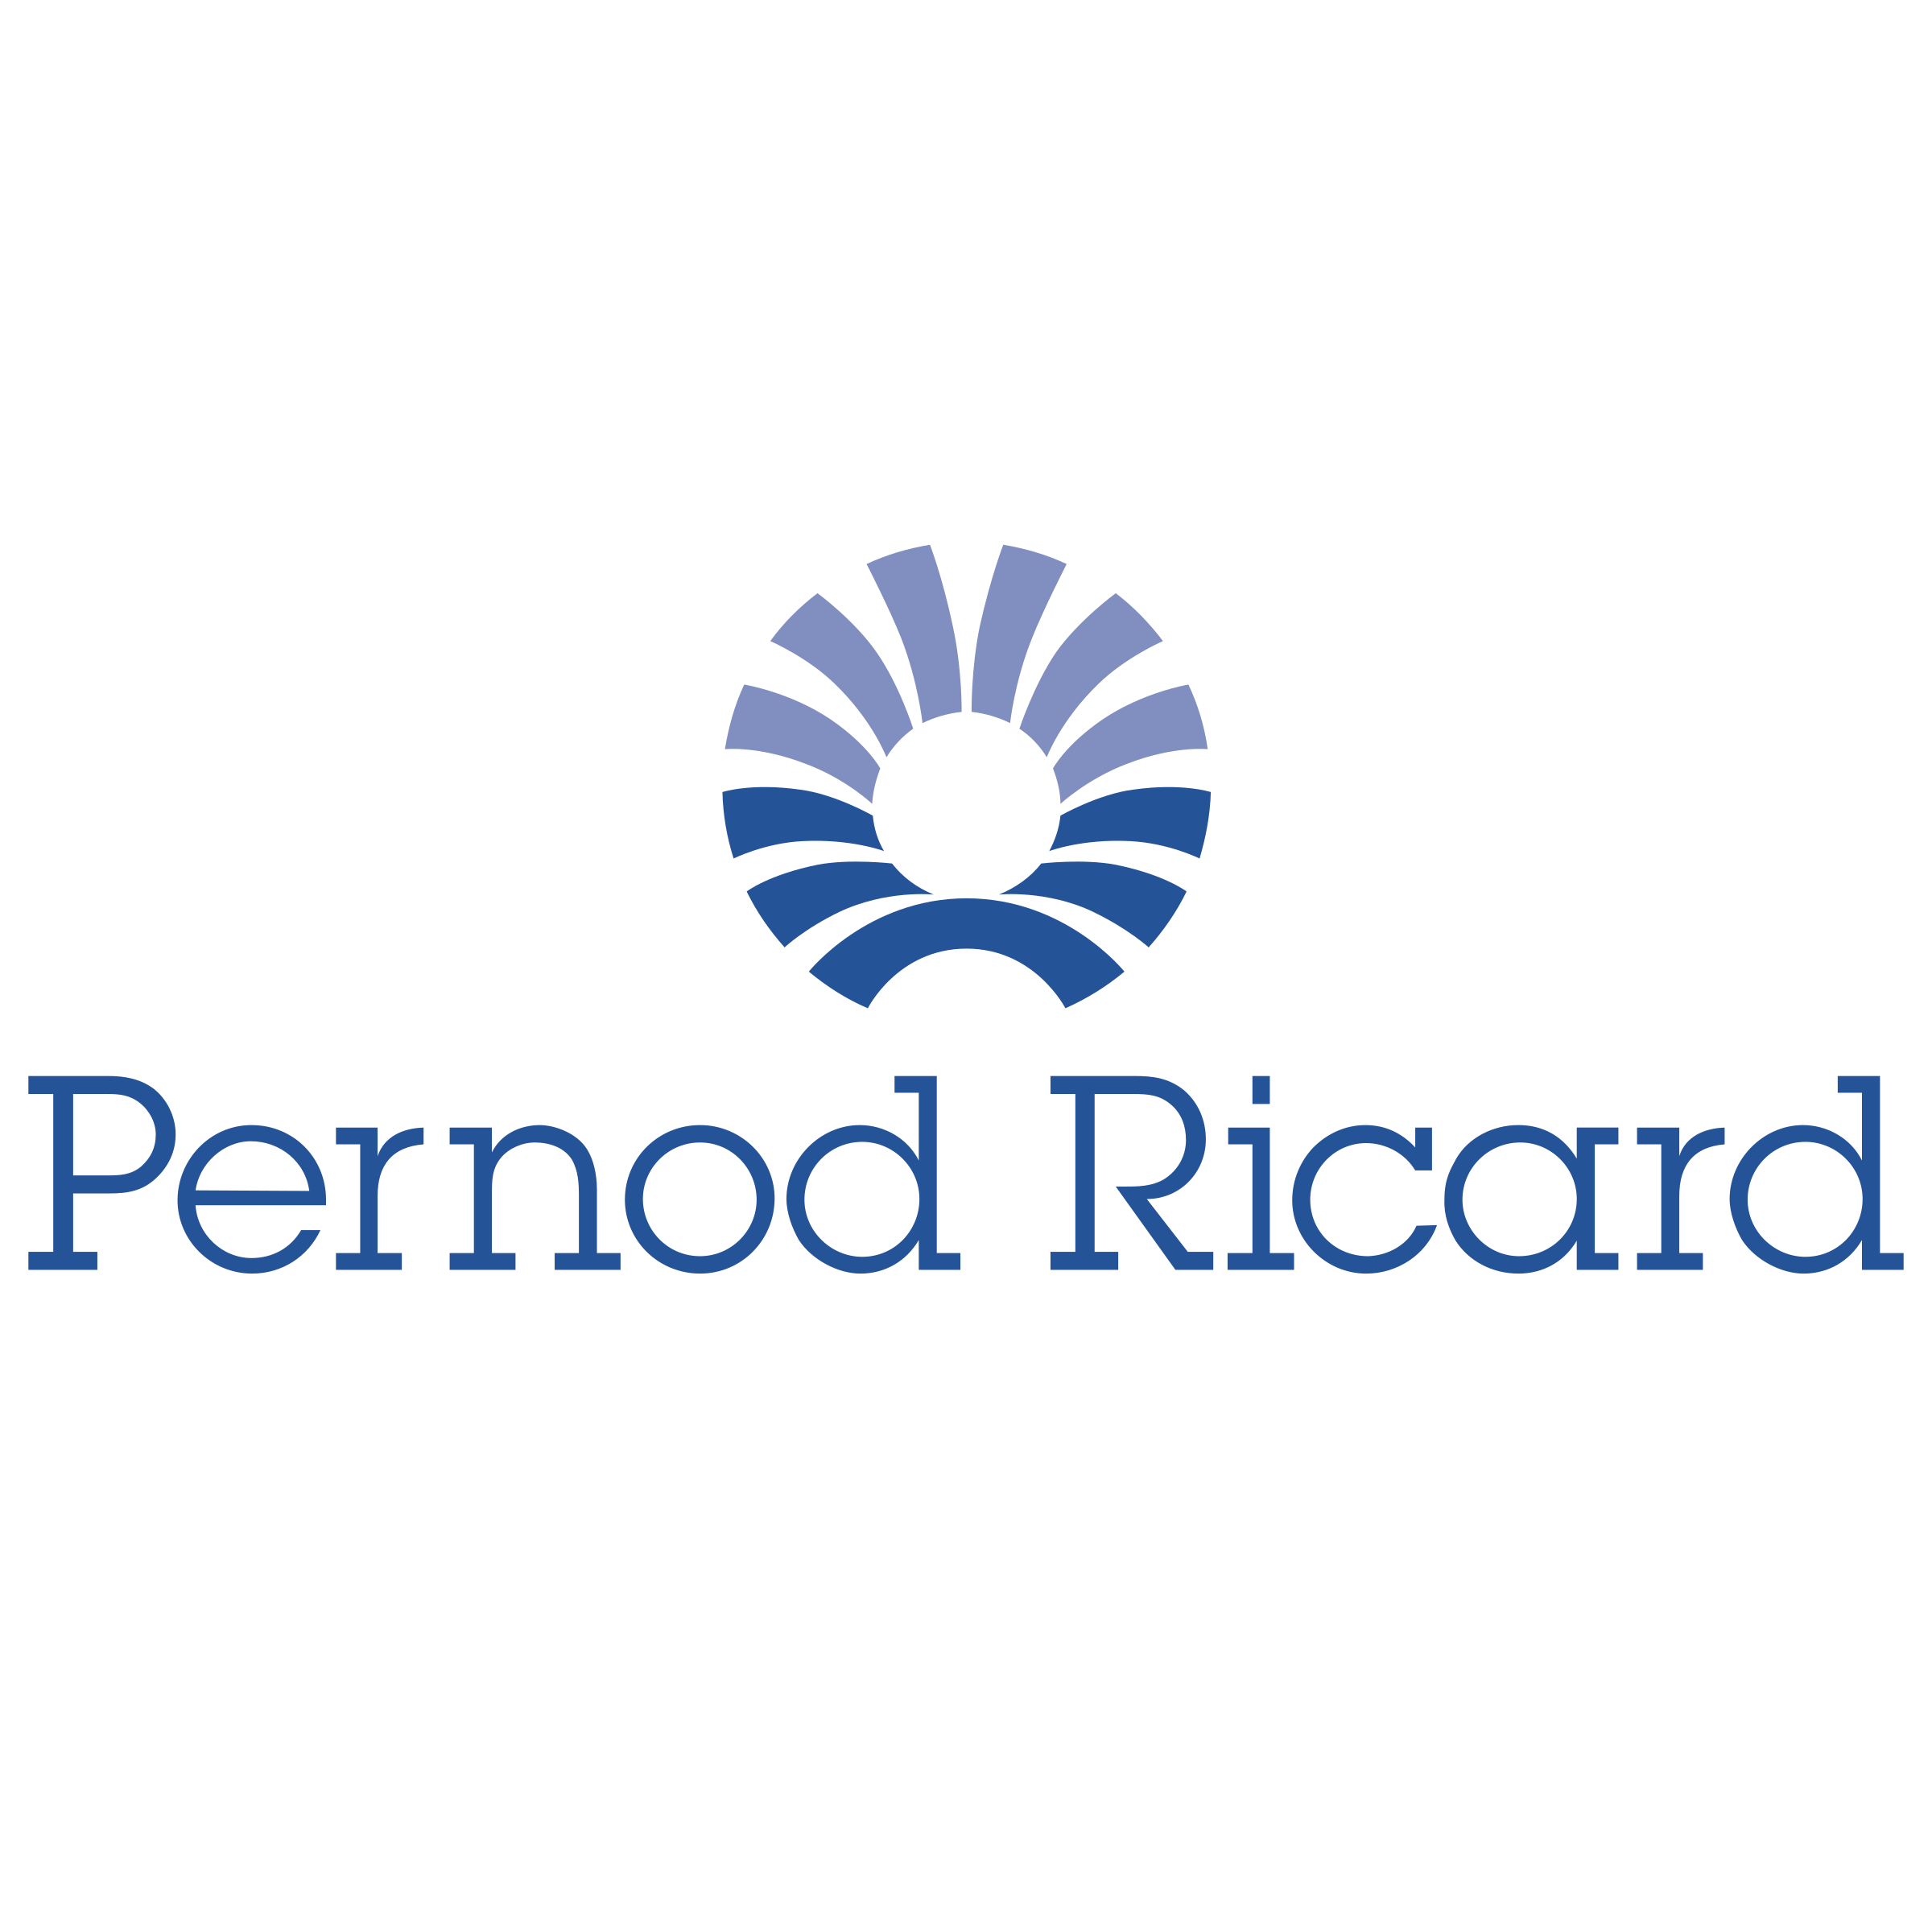 pernod-ricard-logo-png-transparent